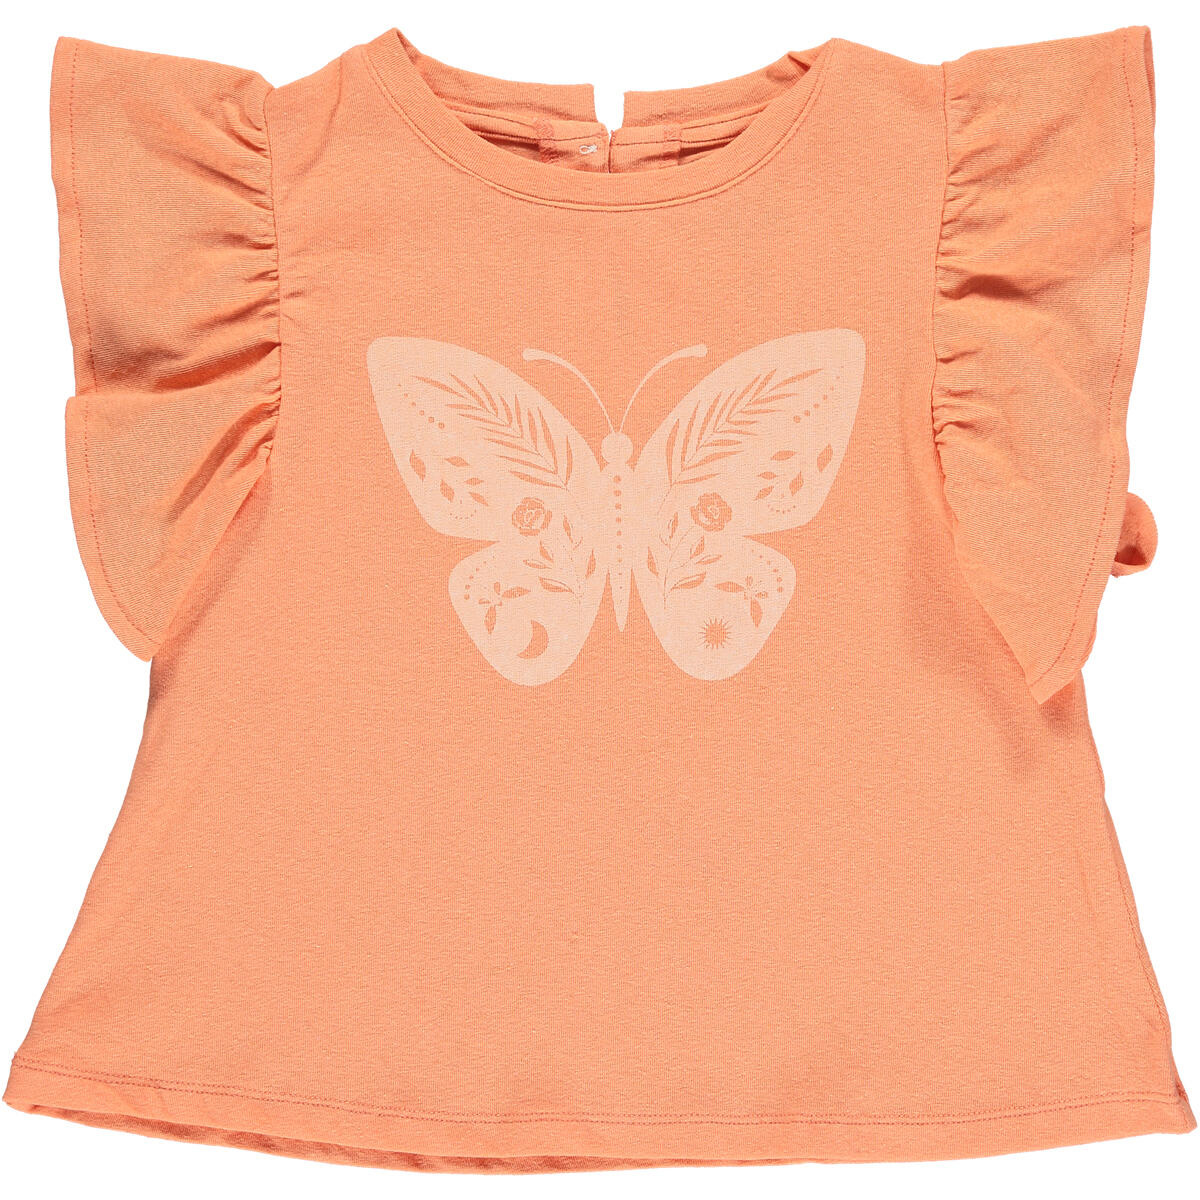 Vignette Sutton T-Shirt Block Print Butterfly